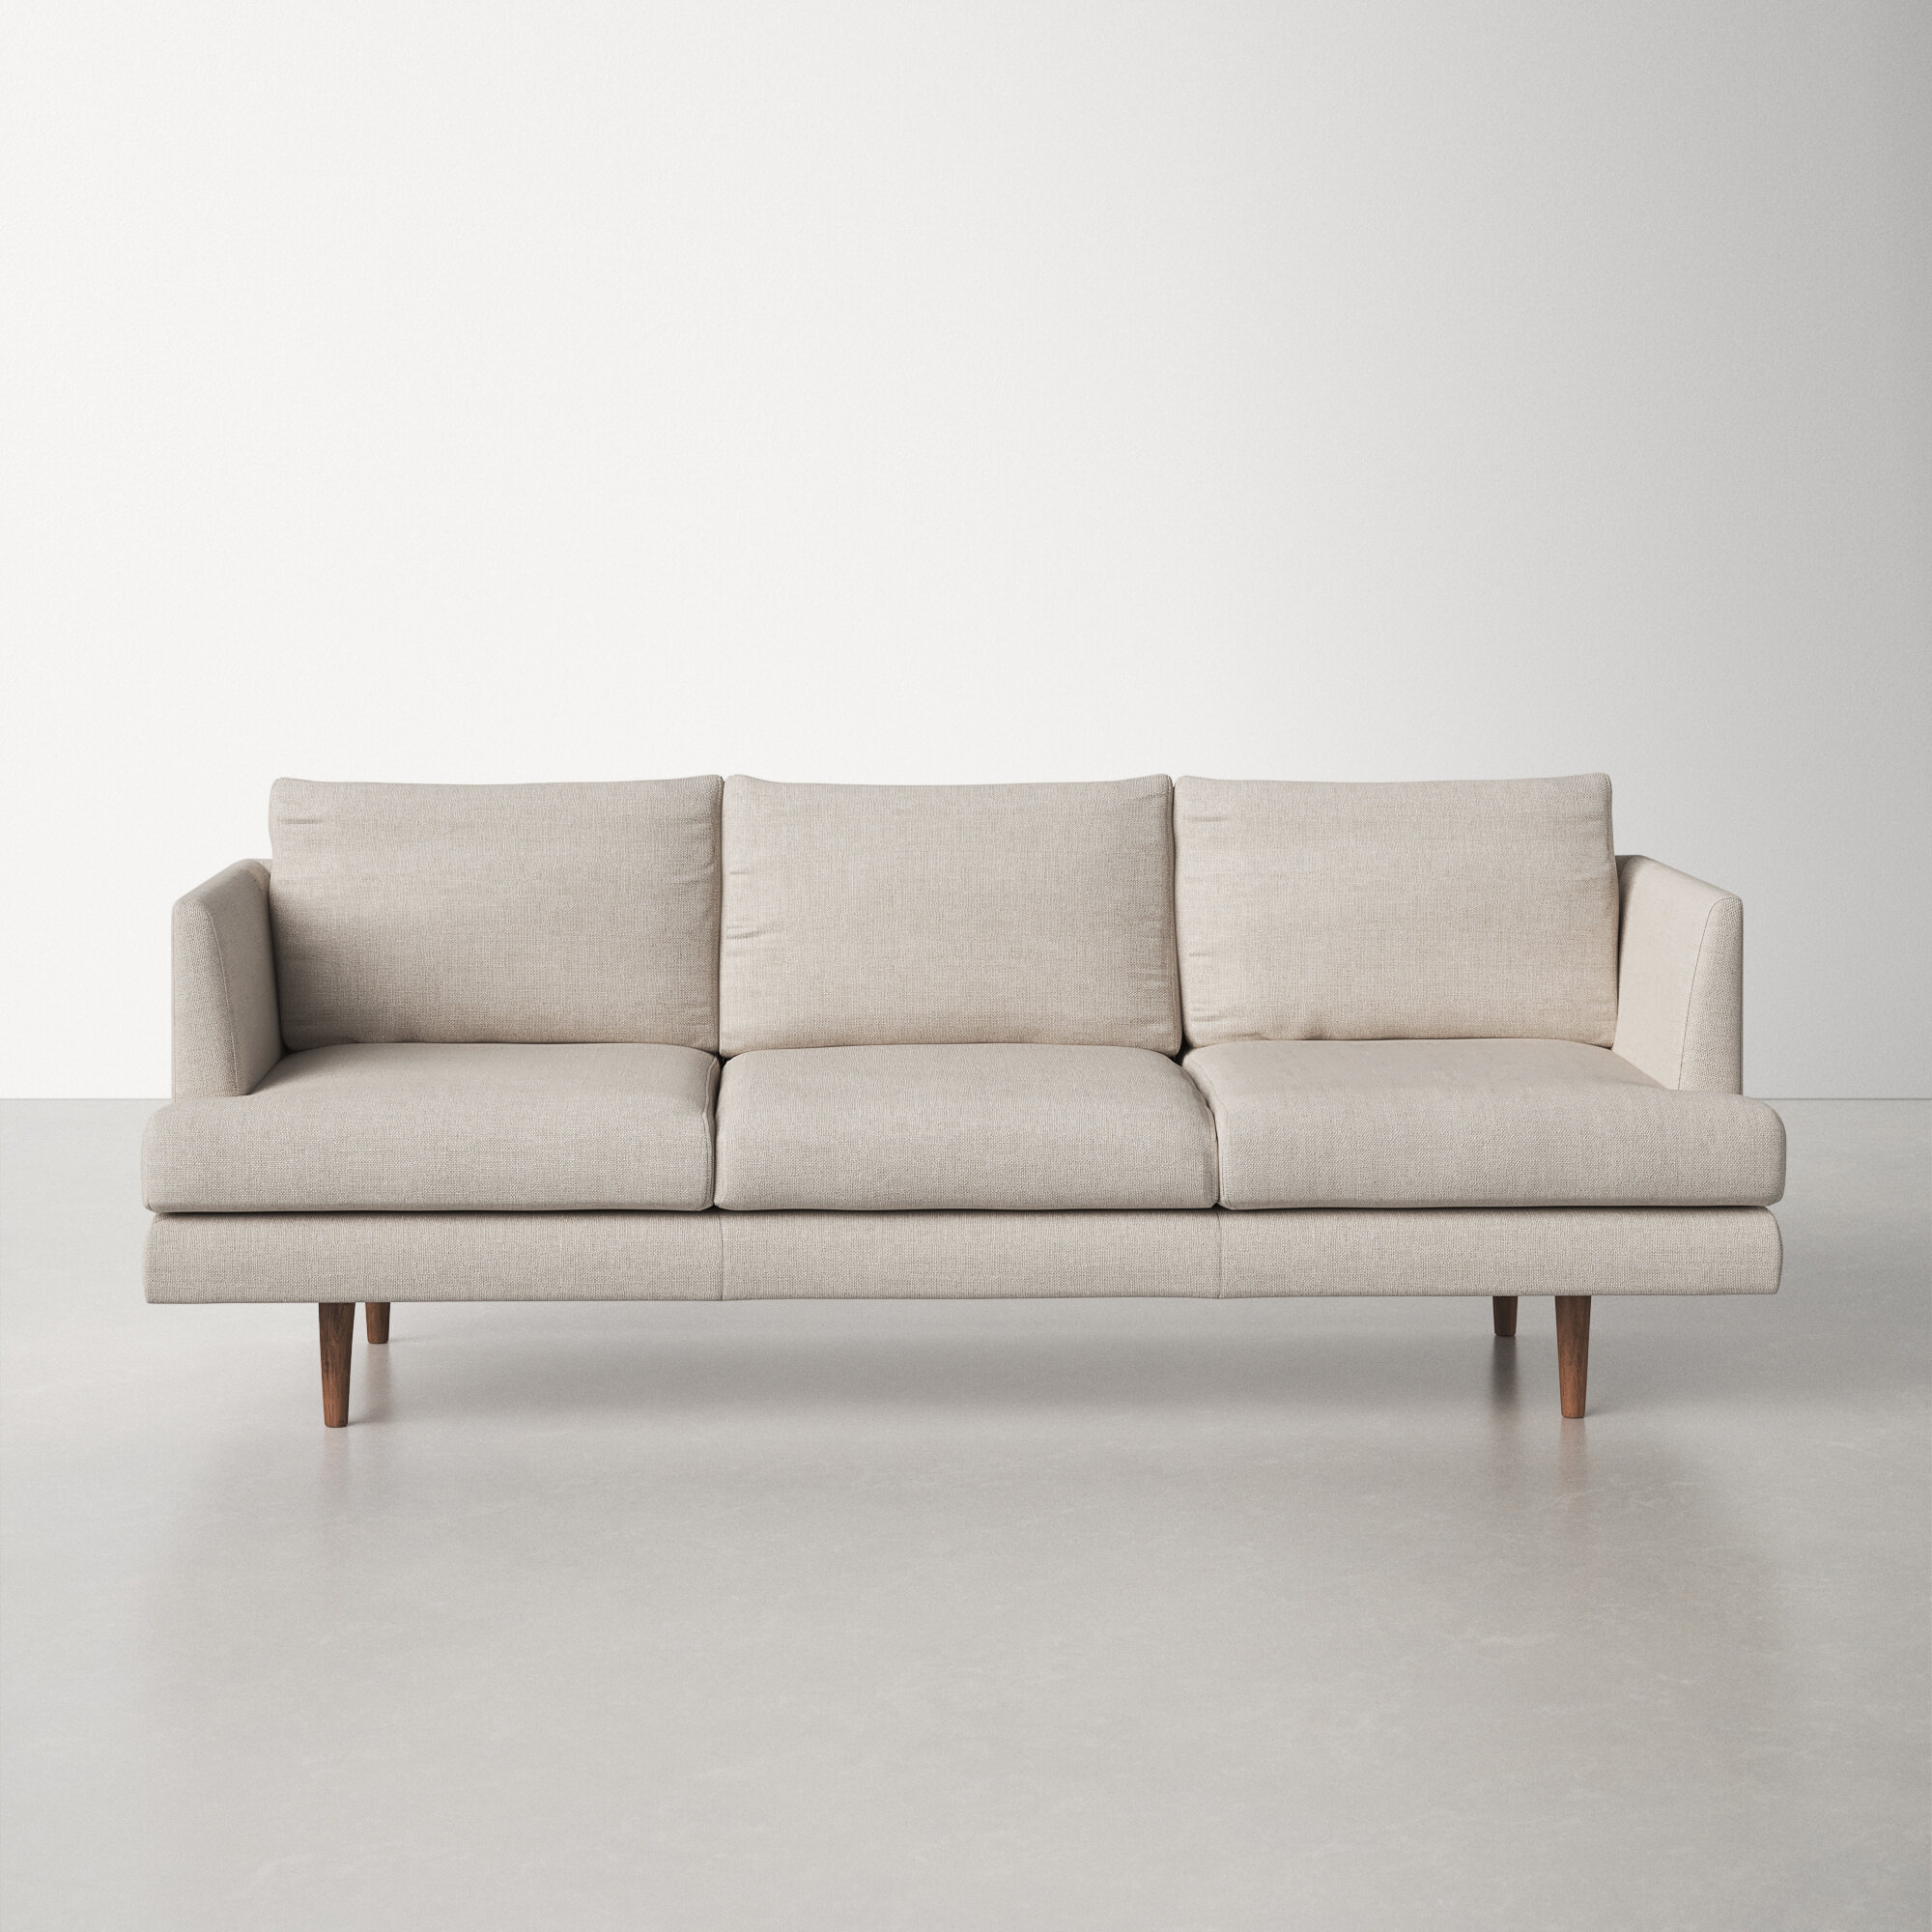 Scandinavian design sofa